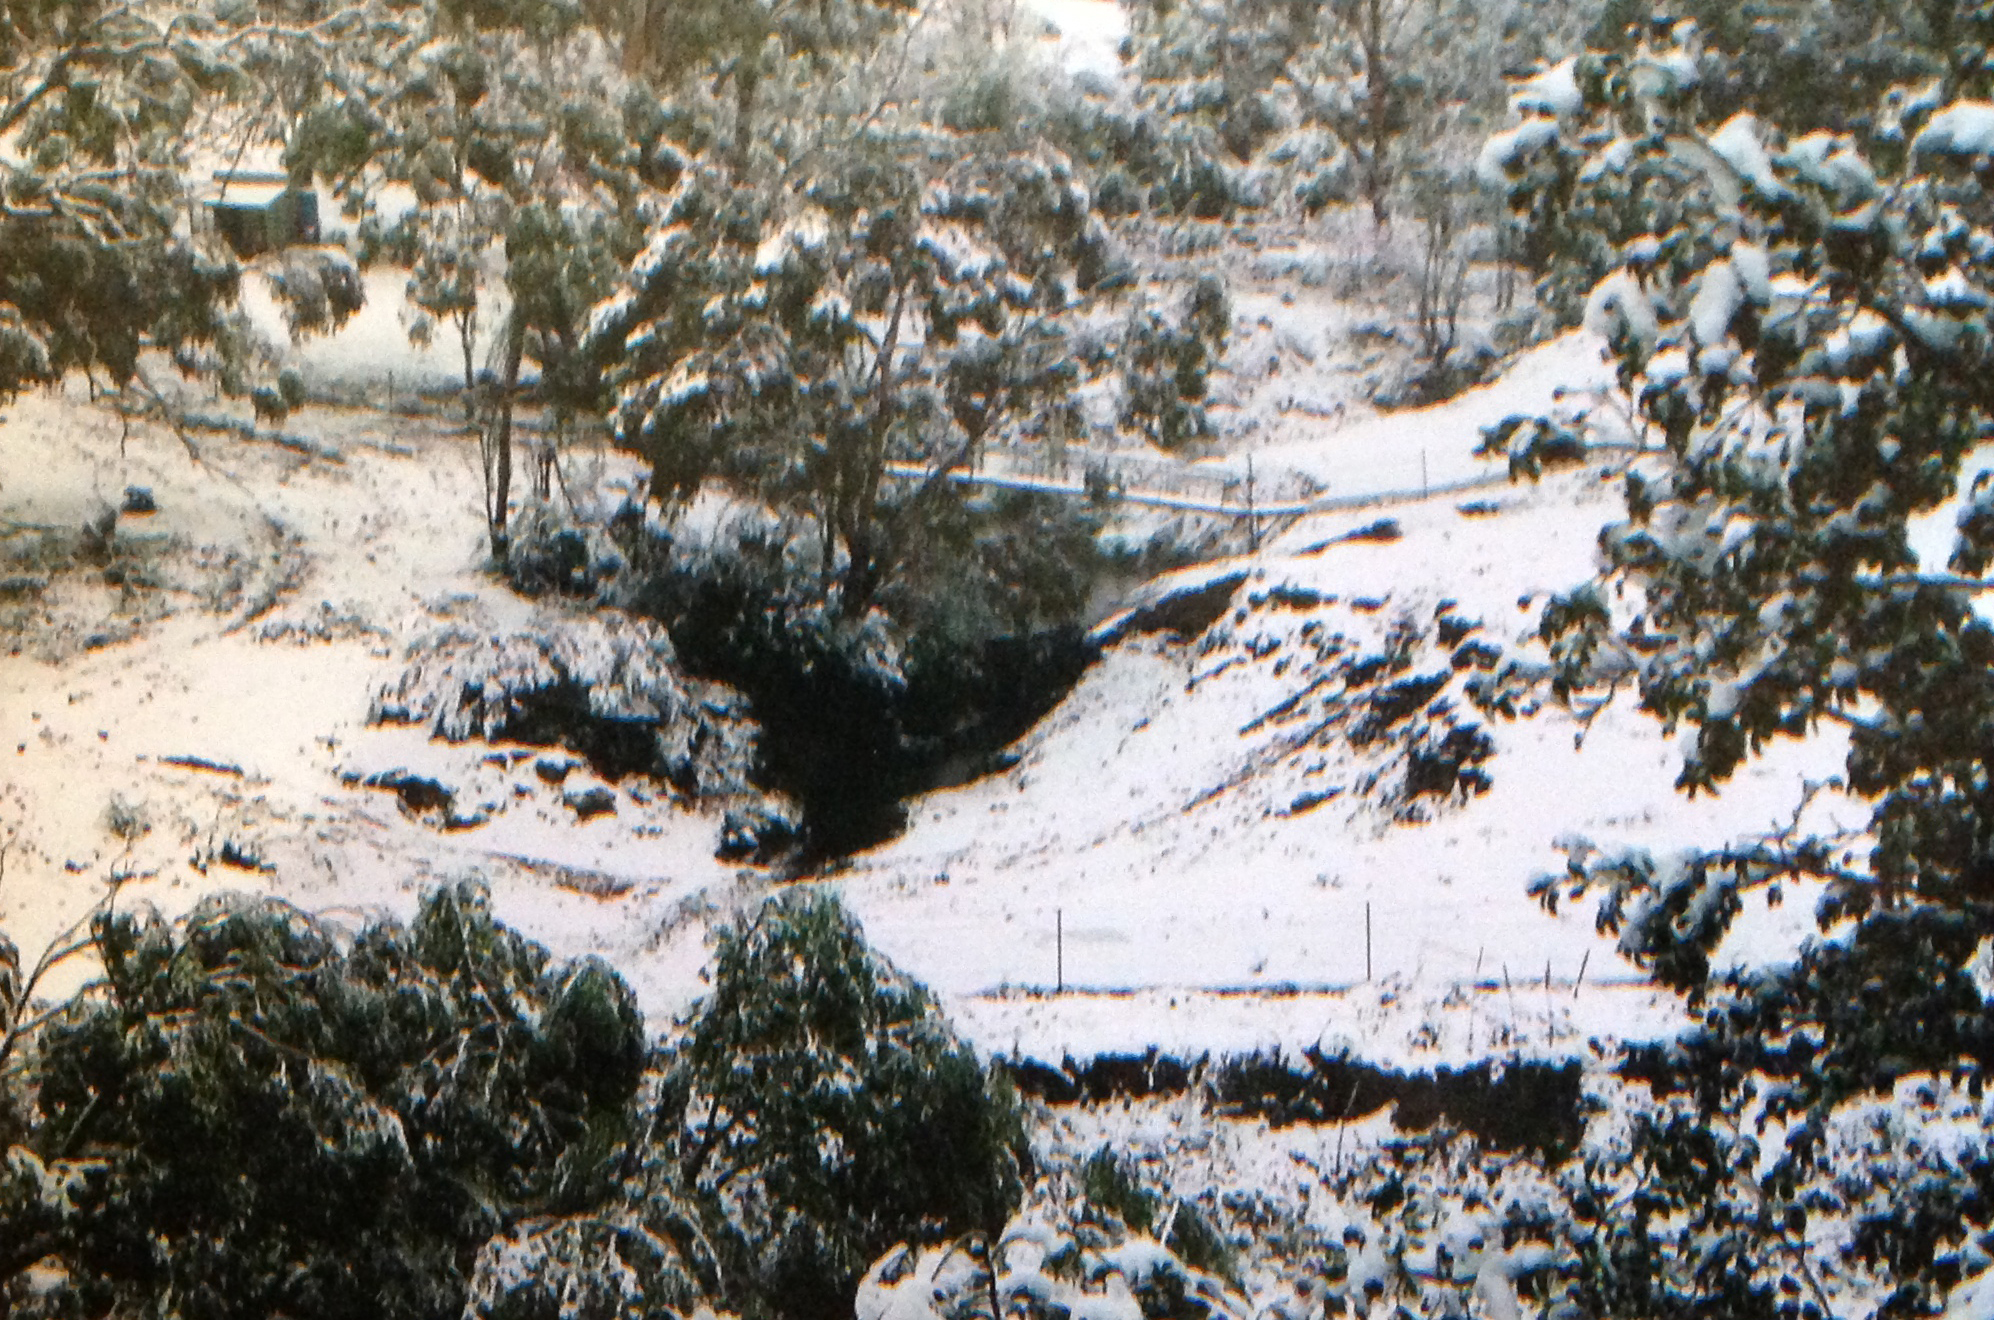 View from Back Verandah Snowing